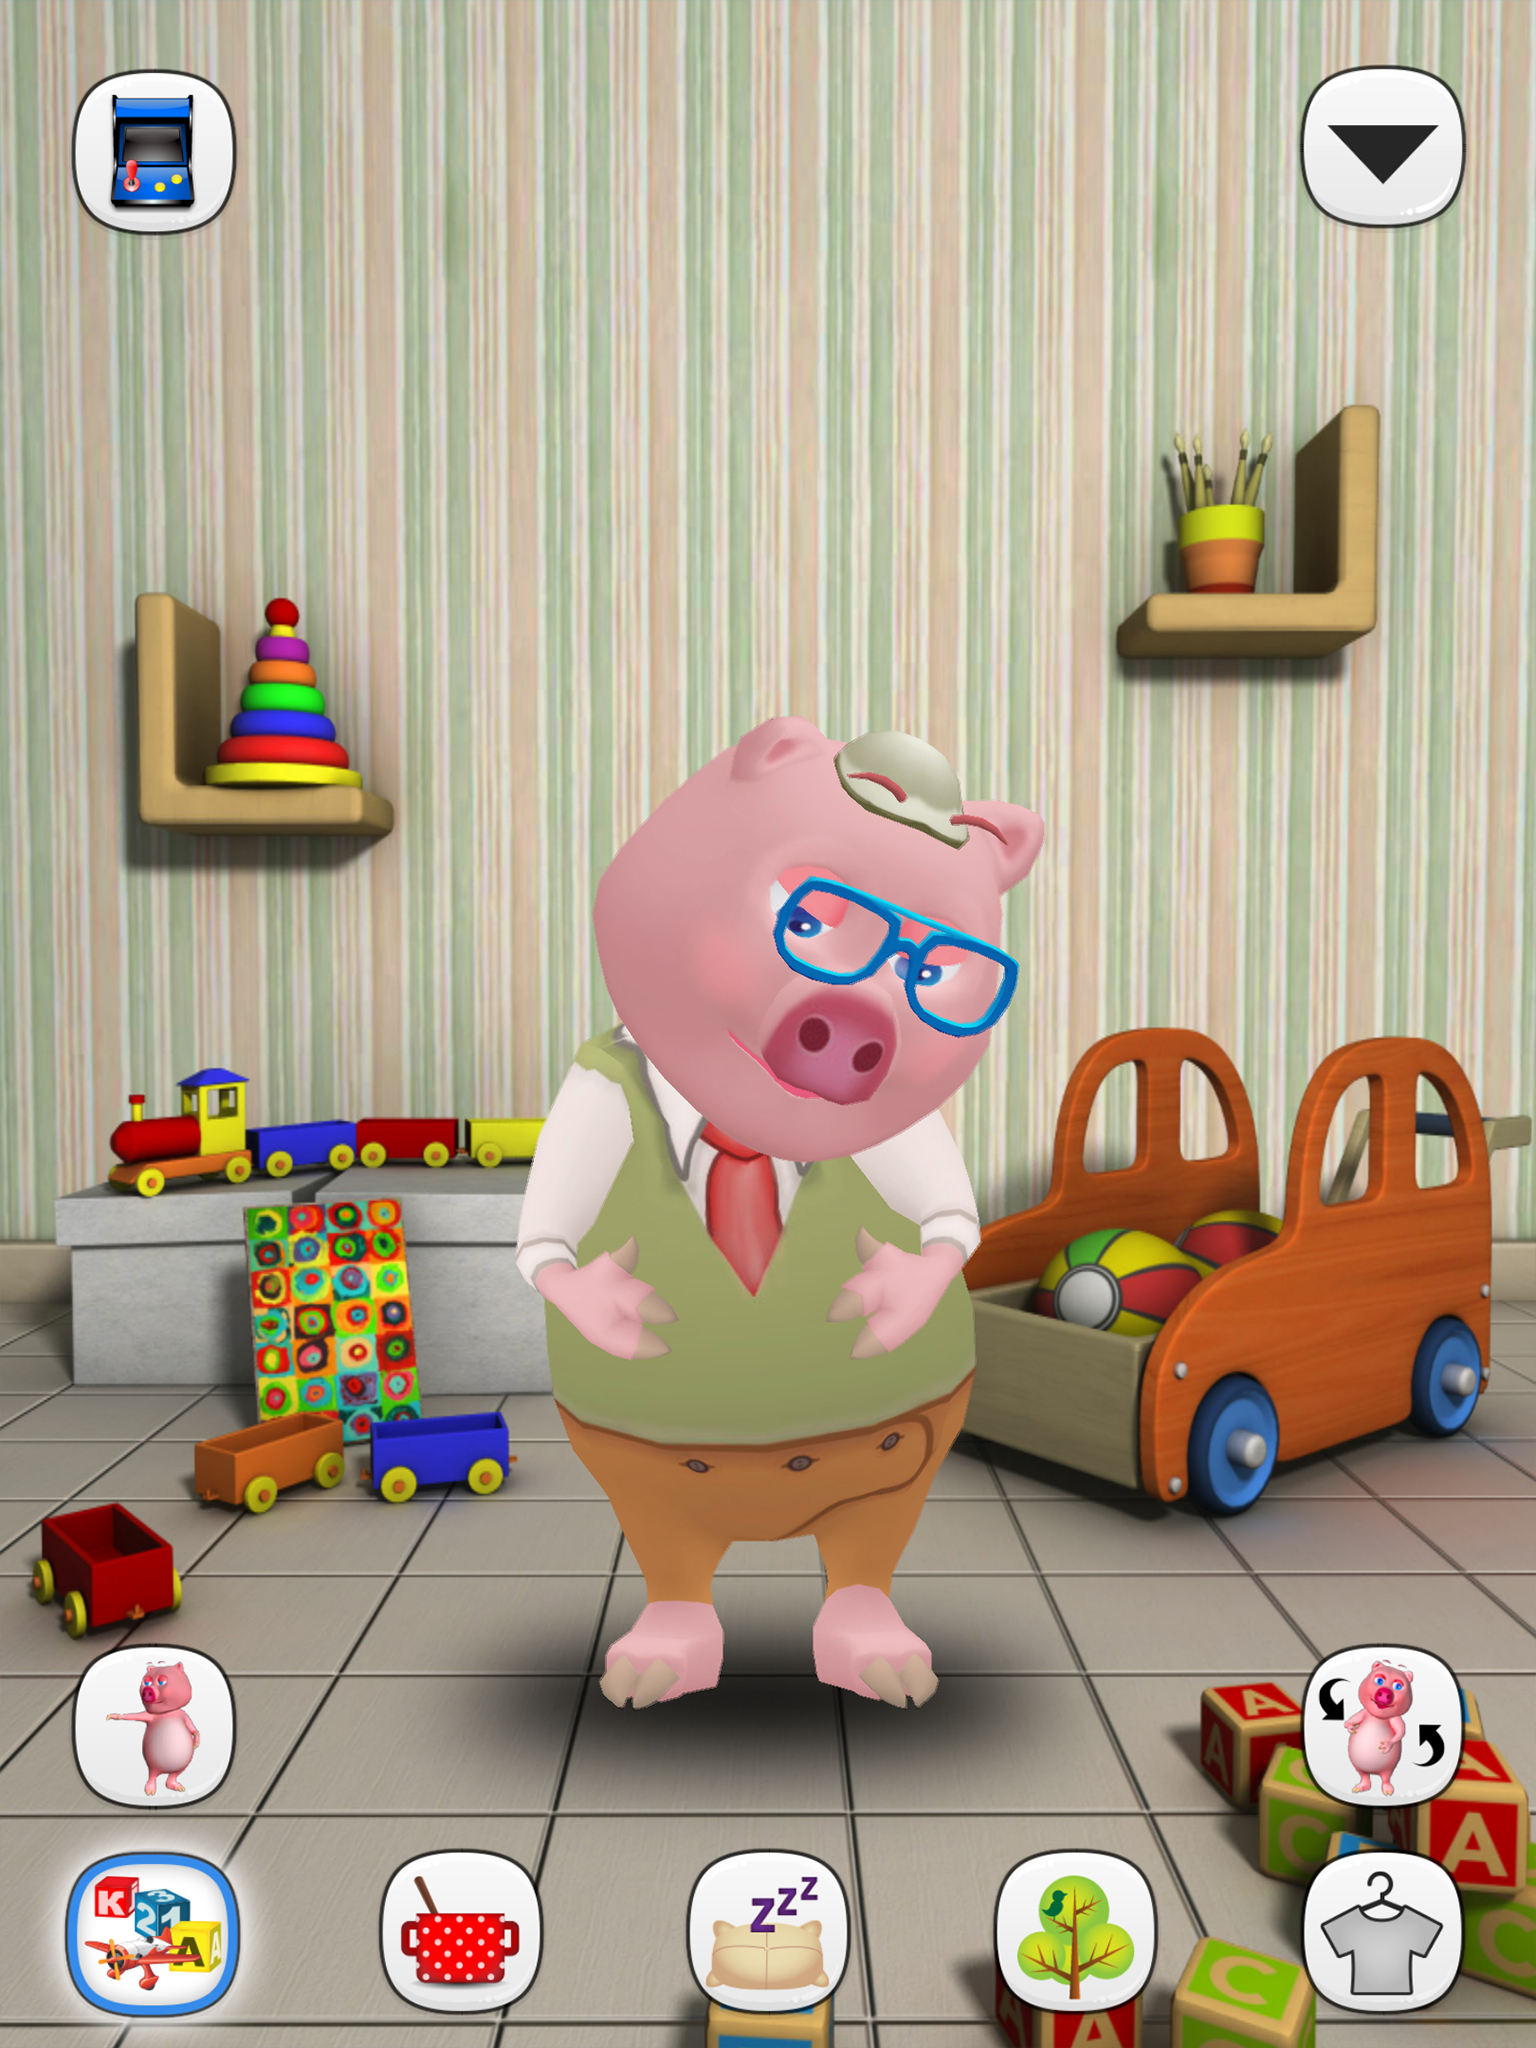 My Talking Pig Virtual Pet